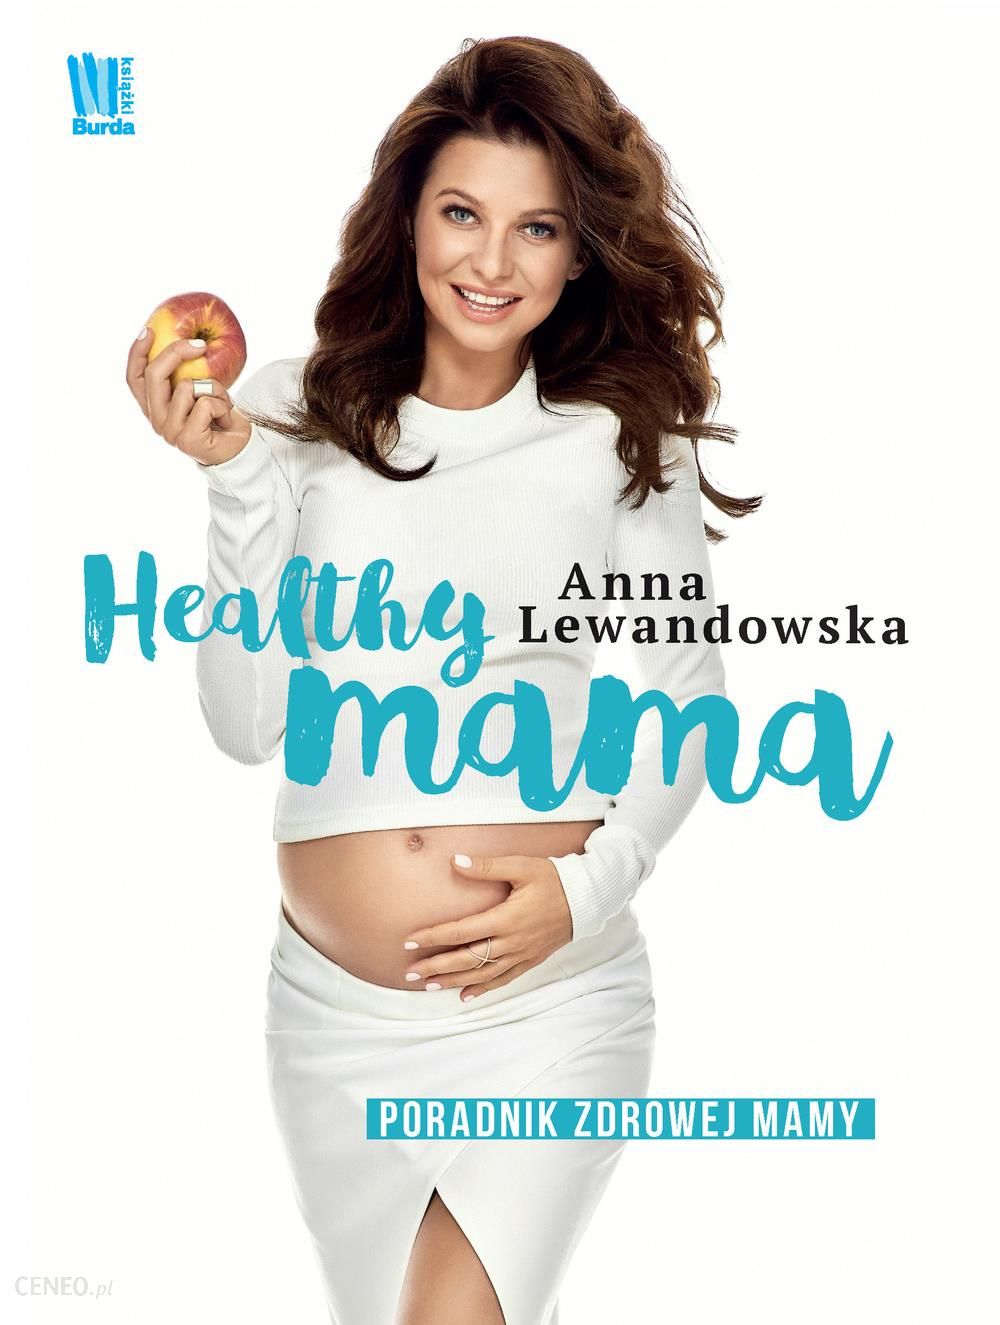 6. Healthy mama. Poradnik zdrowej mamy, Anna Lewandowska, wyd. Burda Media Polska